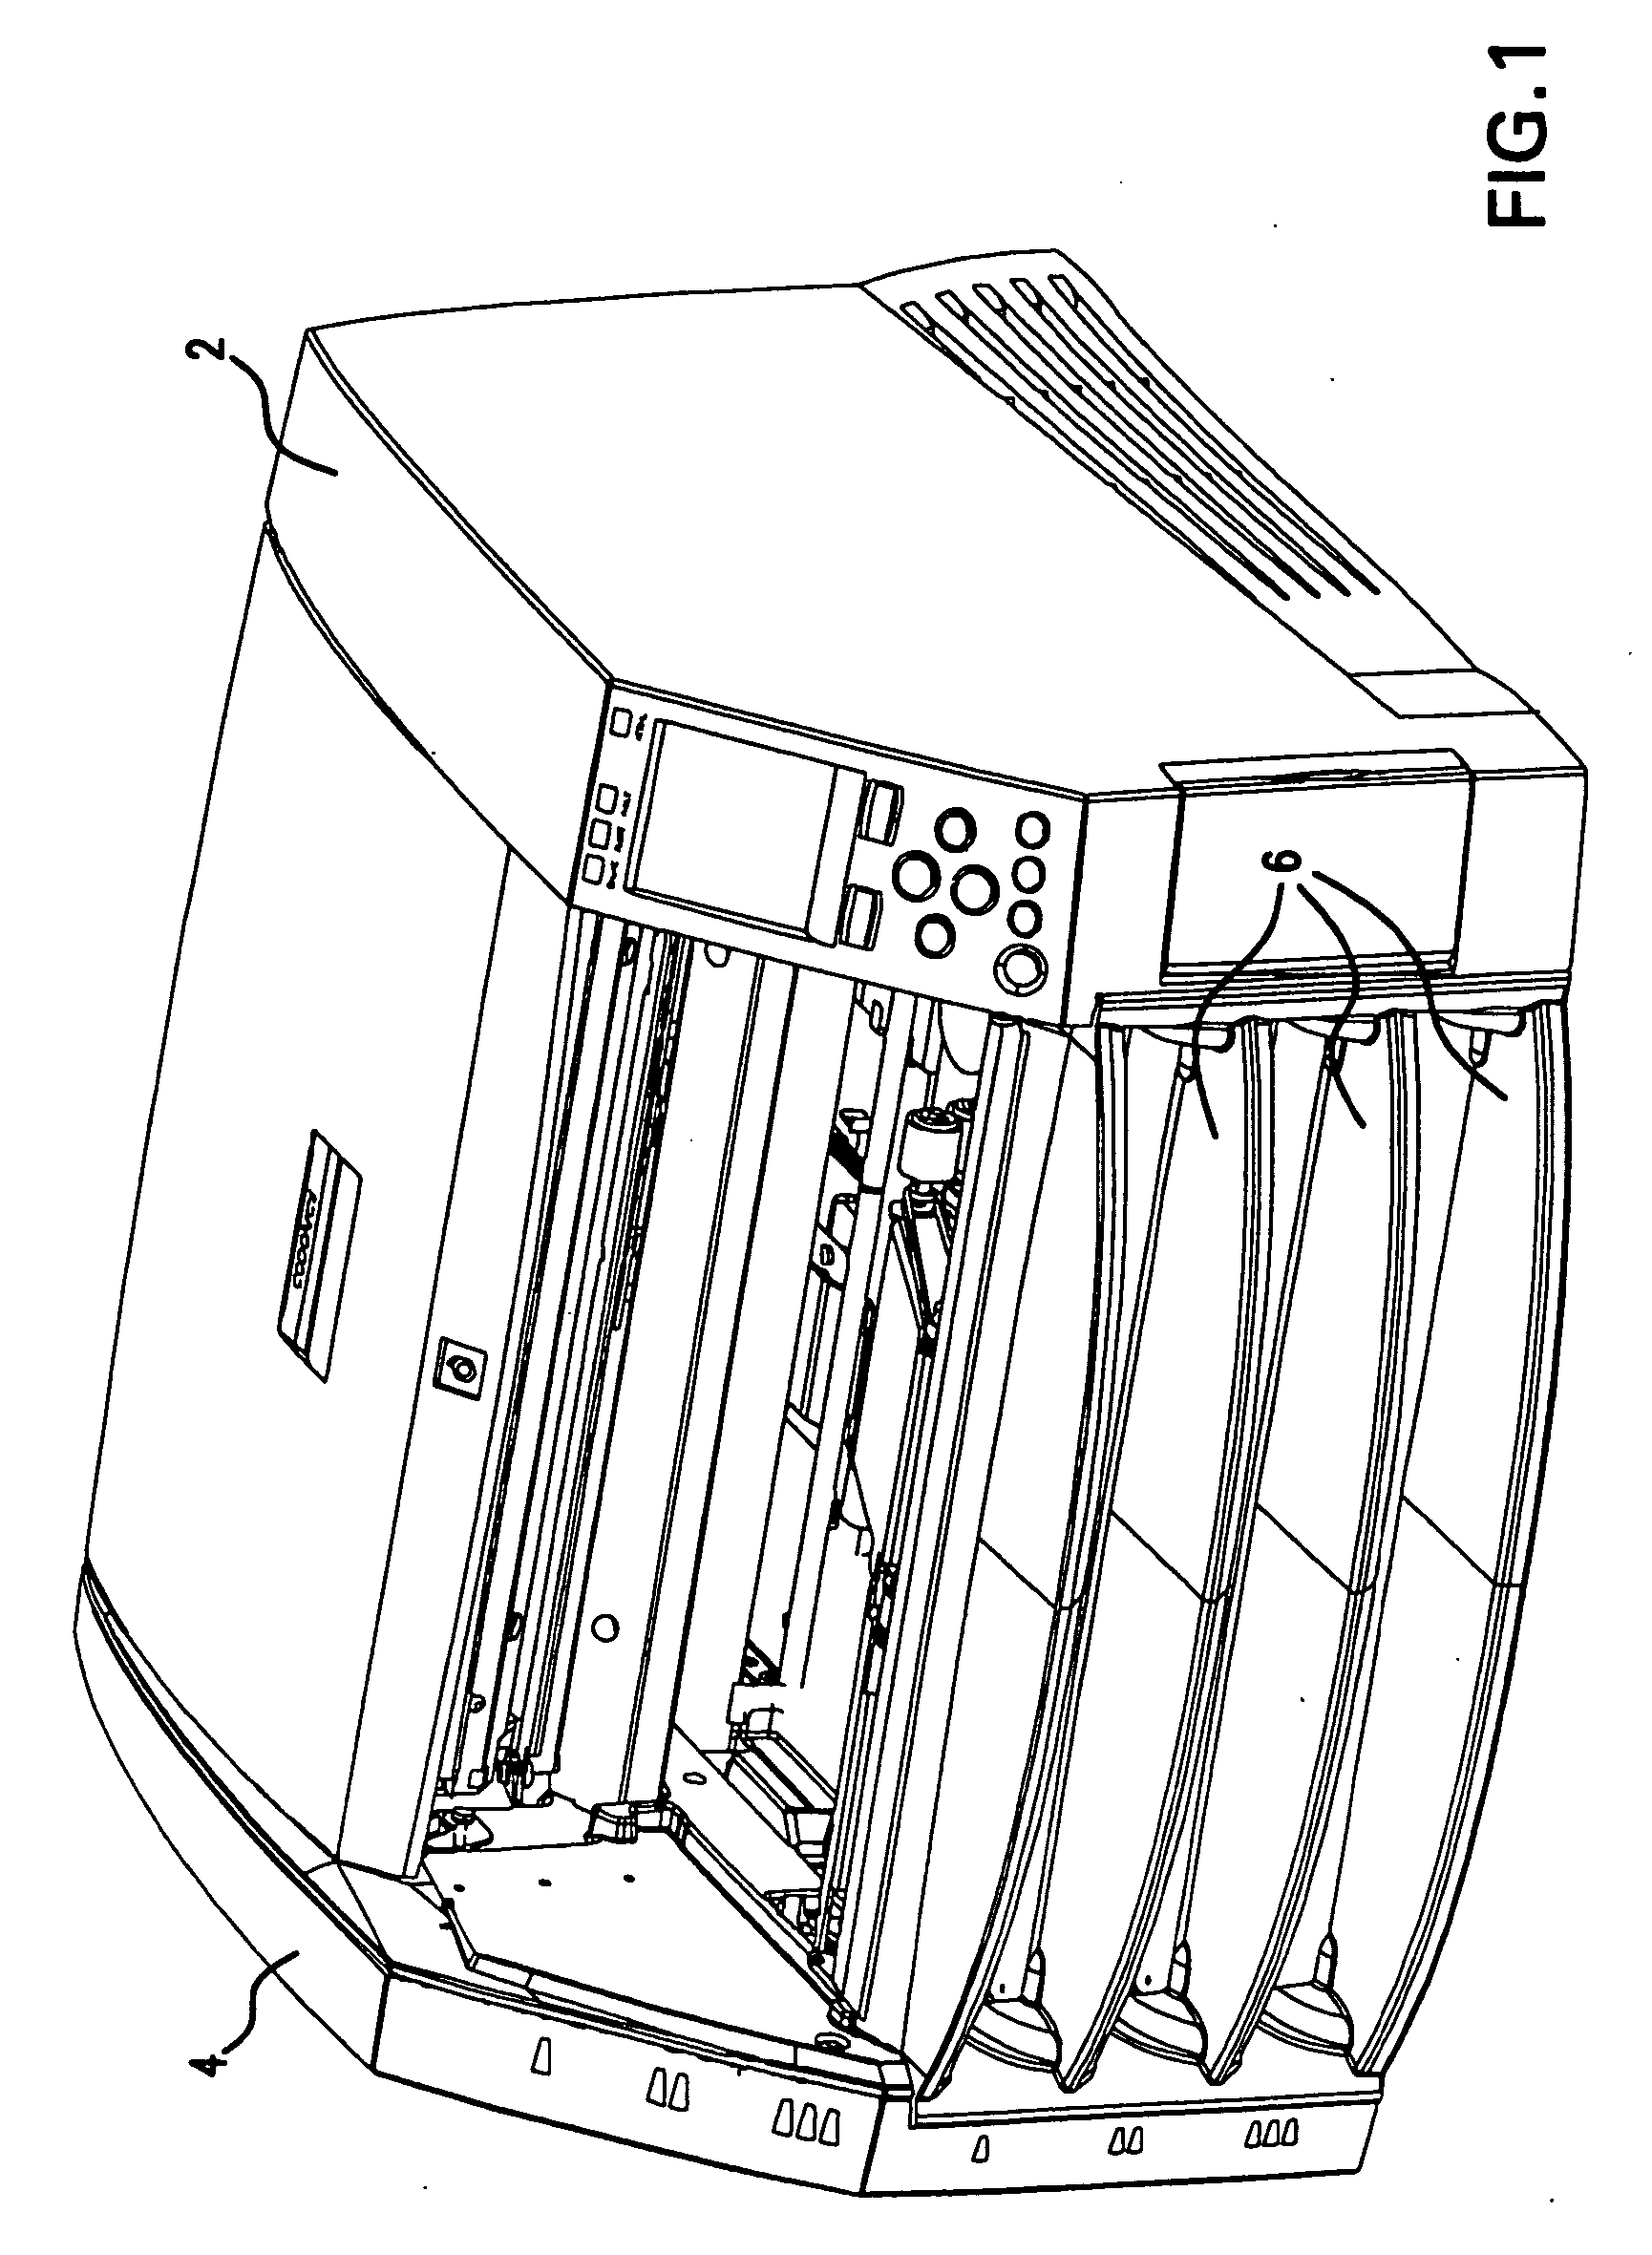 Multi-media printer with removable memory storing printer settings